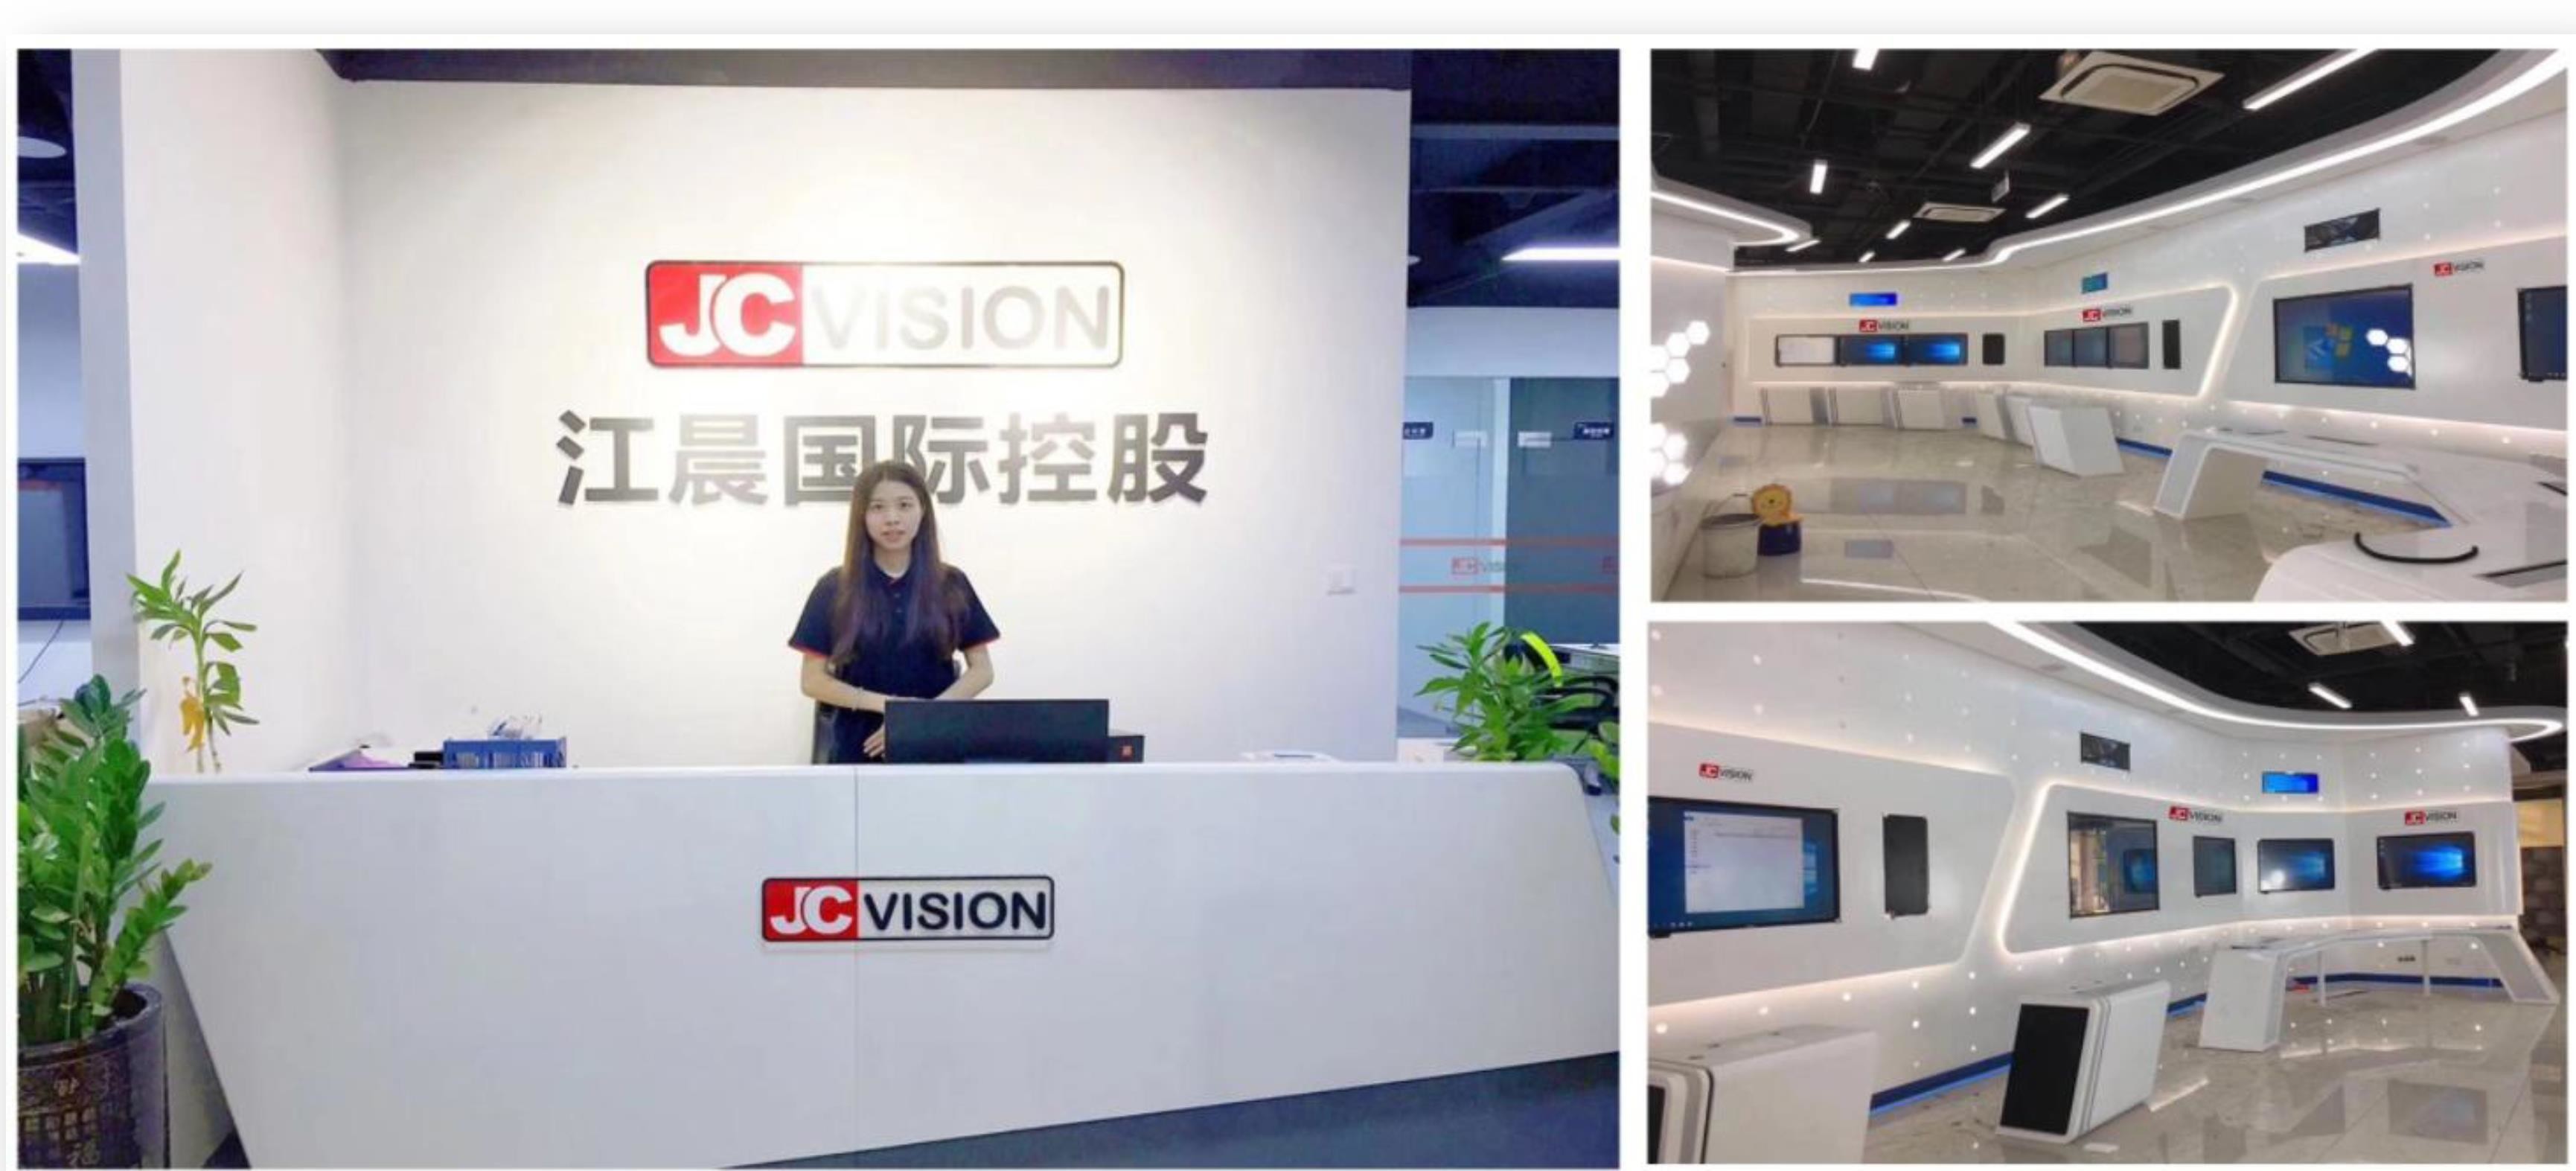 Shenzhen Junction Interactive Technology Co., Ltd. 공장 생산 라인